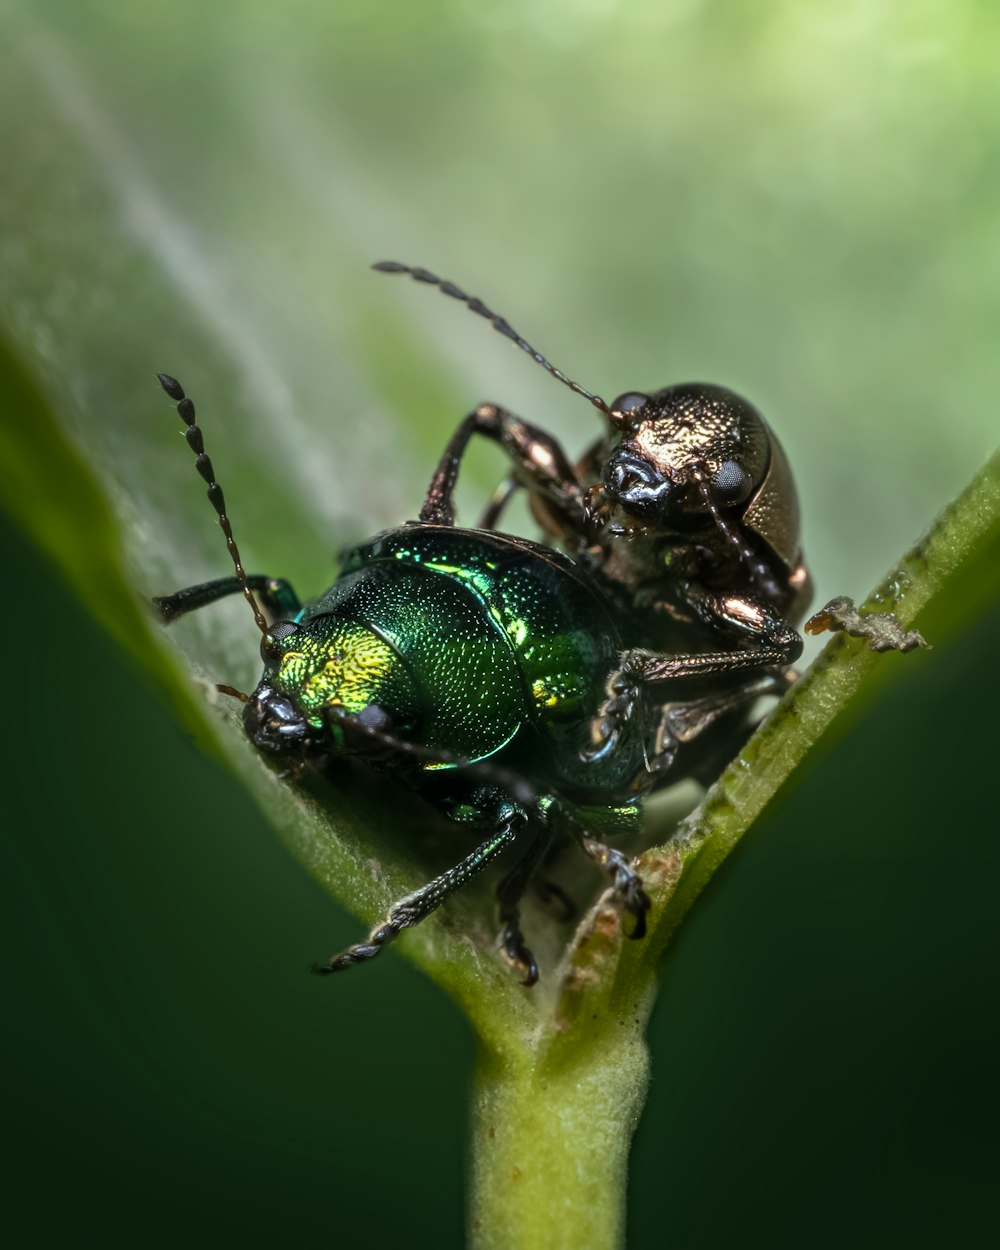 a close up of a beetle on a leaf